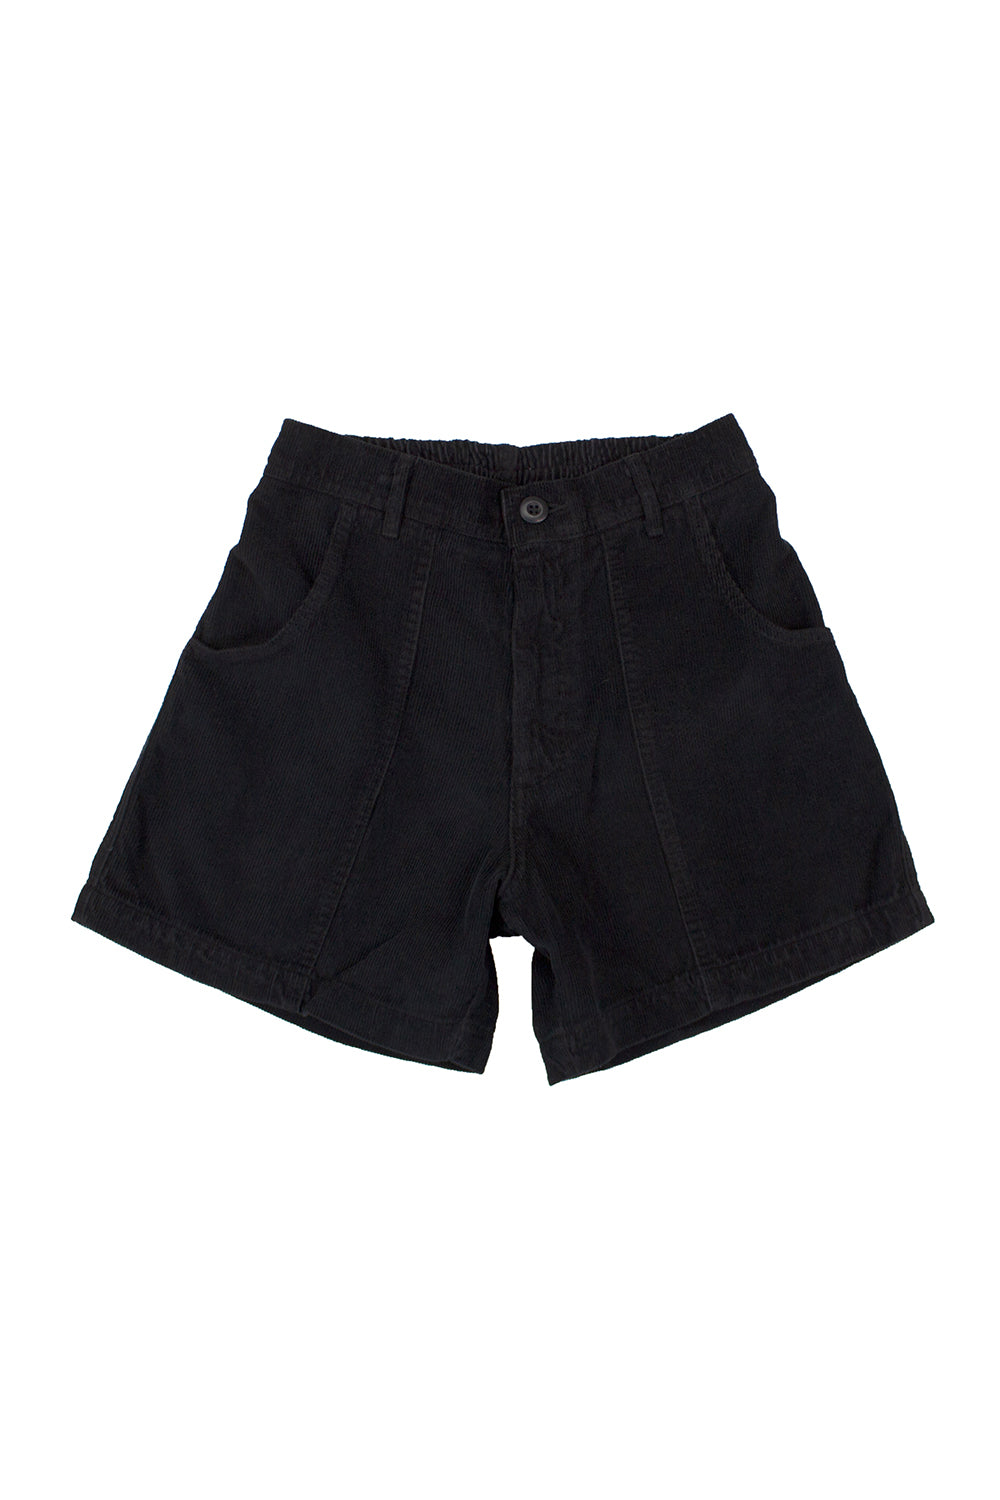 Cabuya Cord Short | Jungmaven Hemp Clothing & Accessories / Color: Black